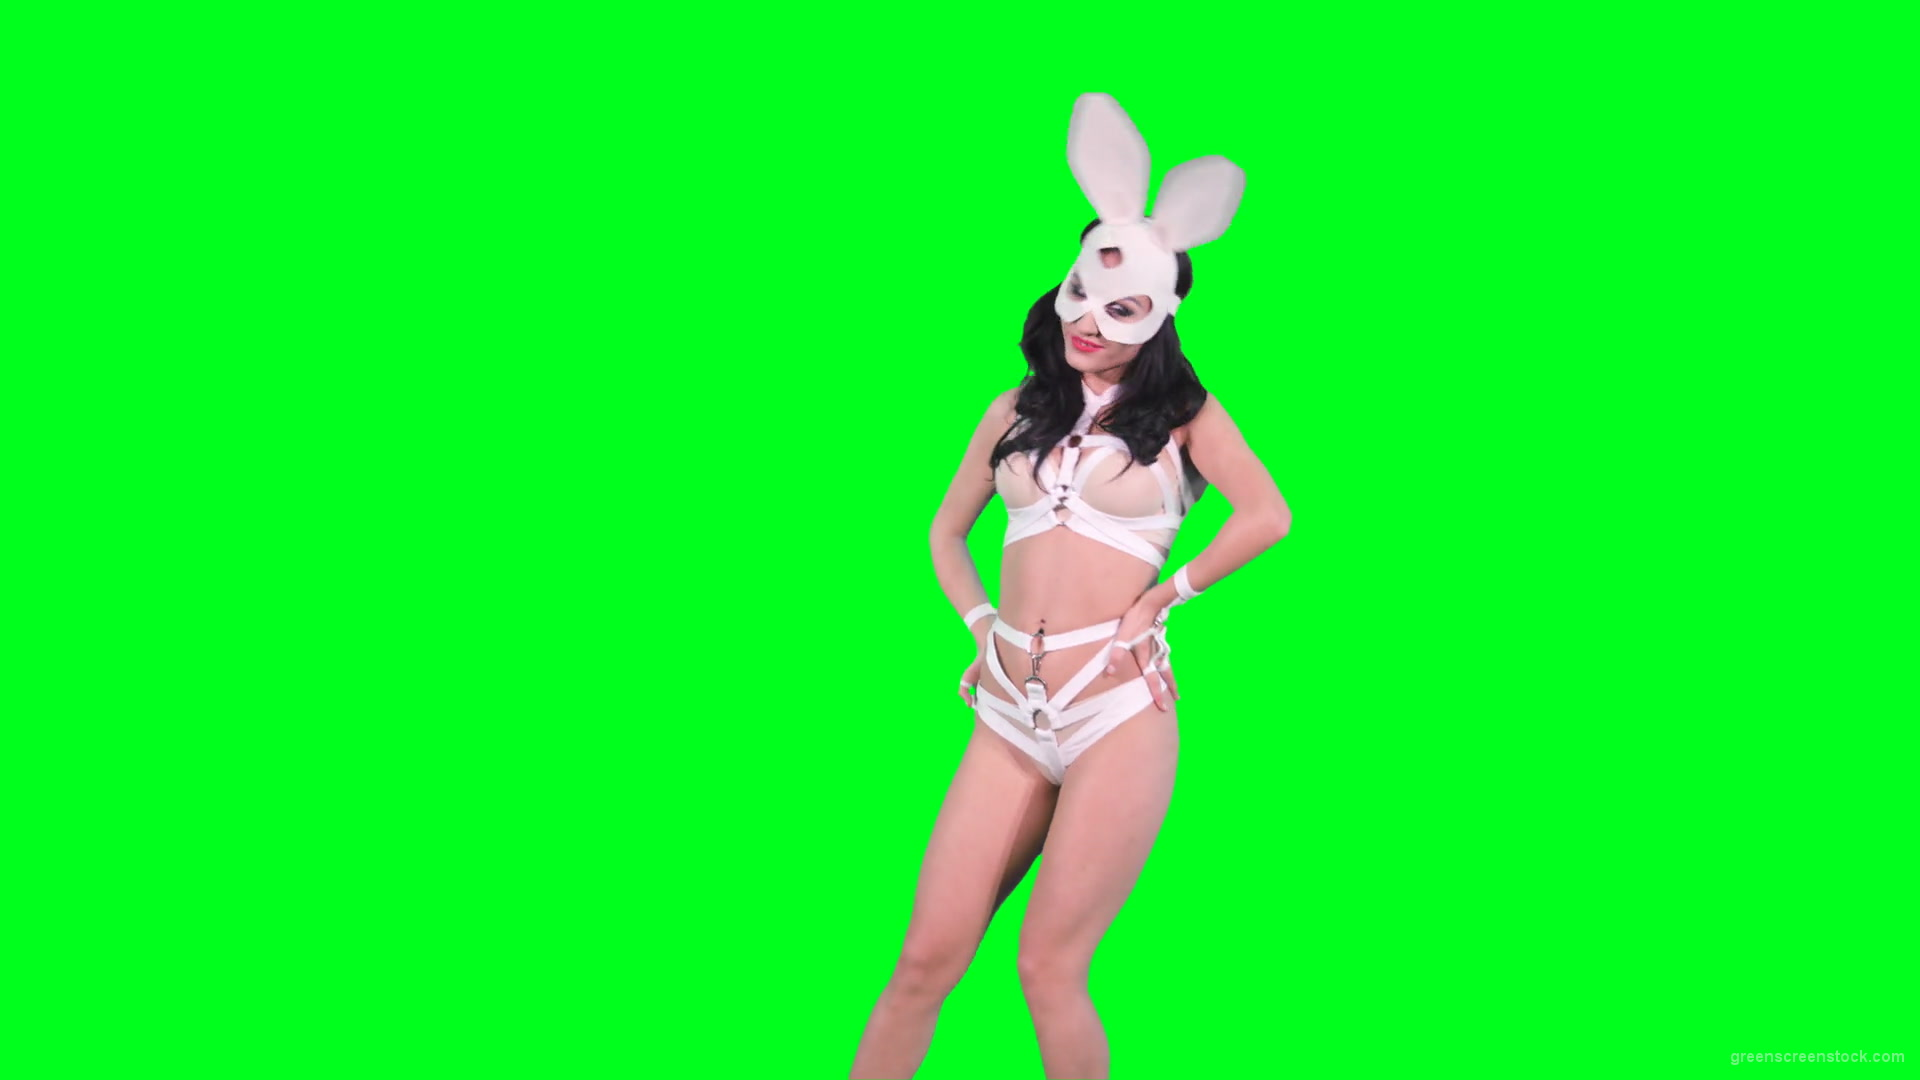 Green-Srcreen-Girl-in-rabbit-costume-sending-air-kiss-4k-Video-Footage-1920_006 Green Screen Stock